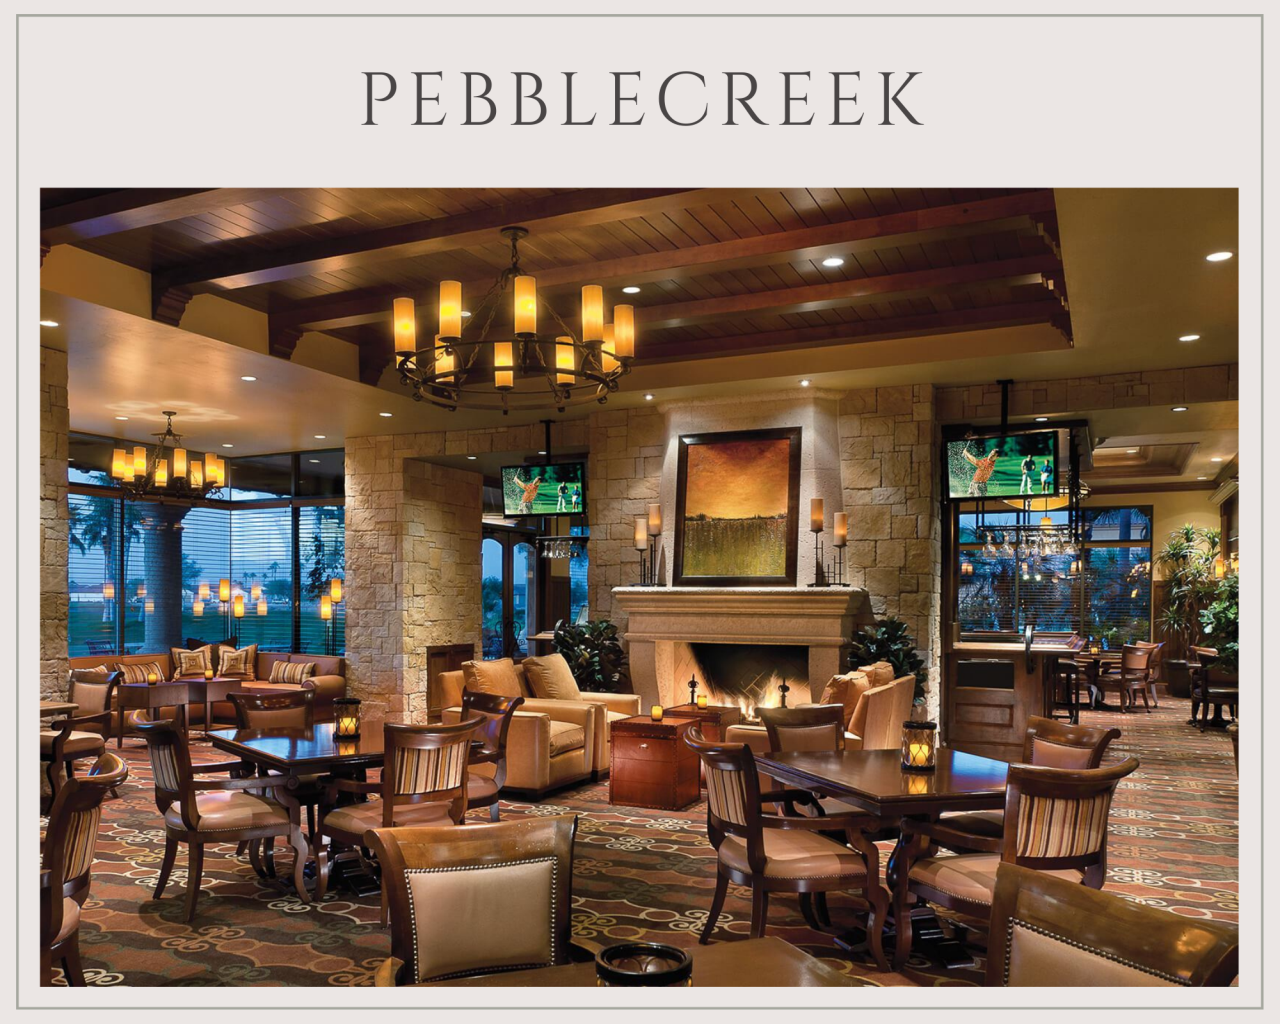 PebbleCreek resales real estate and homes for sale MLS listings